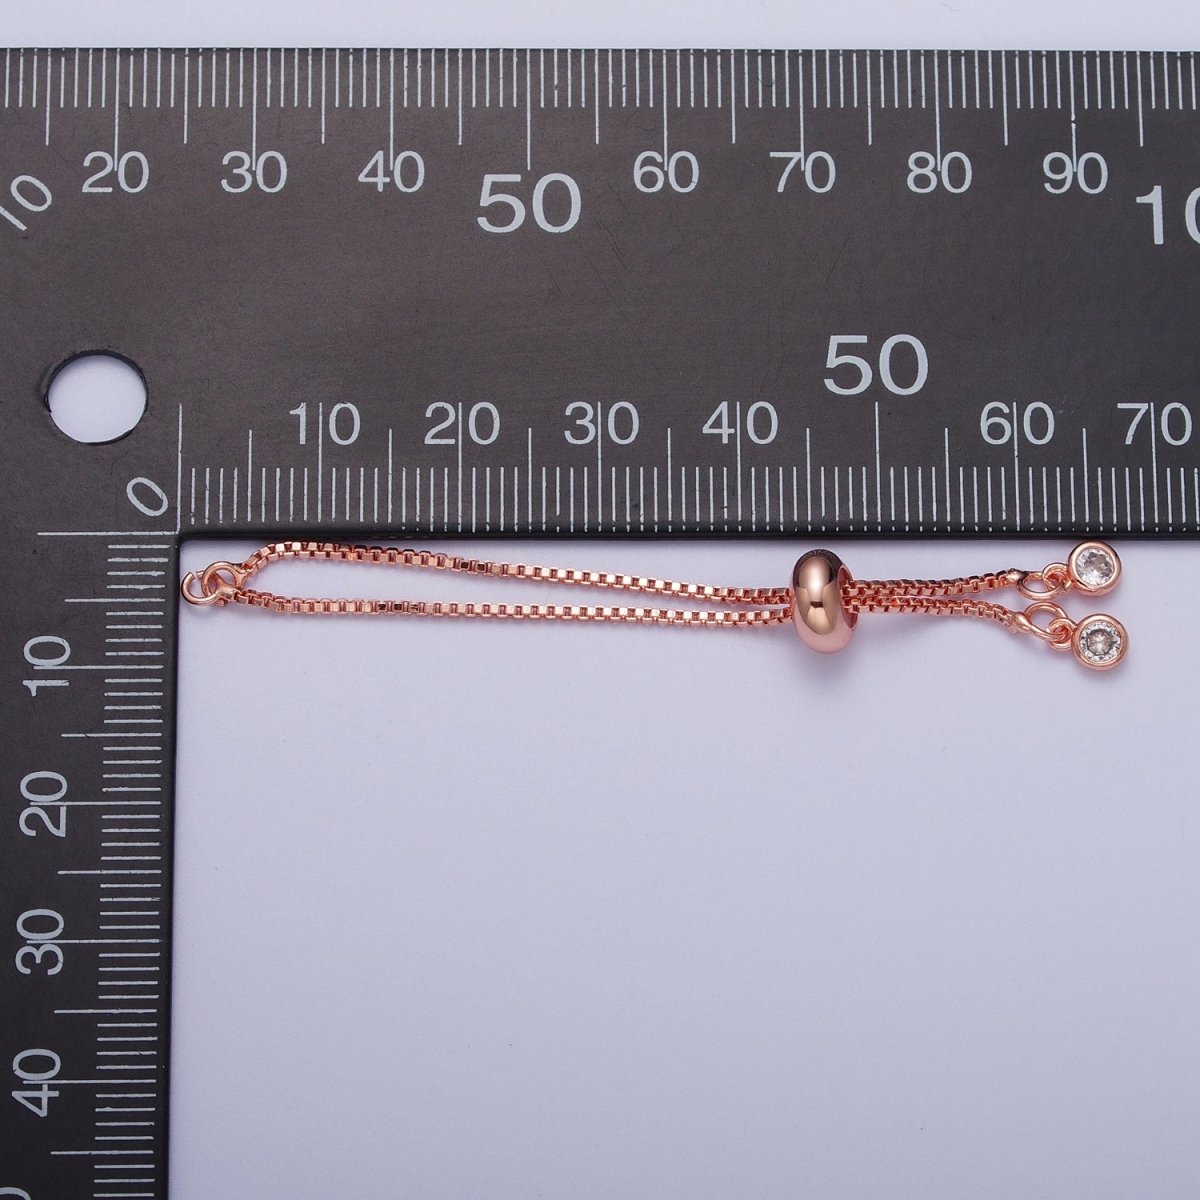 2.5 Inch Adjustable Box Chain Bracelet Supply in Gold, Silver, Black, Rose Gold | K-124 K-130 K-132 K-133 - DLUXCA